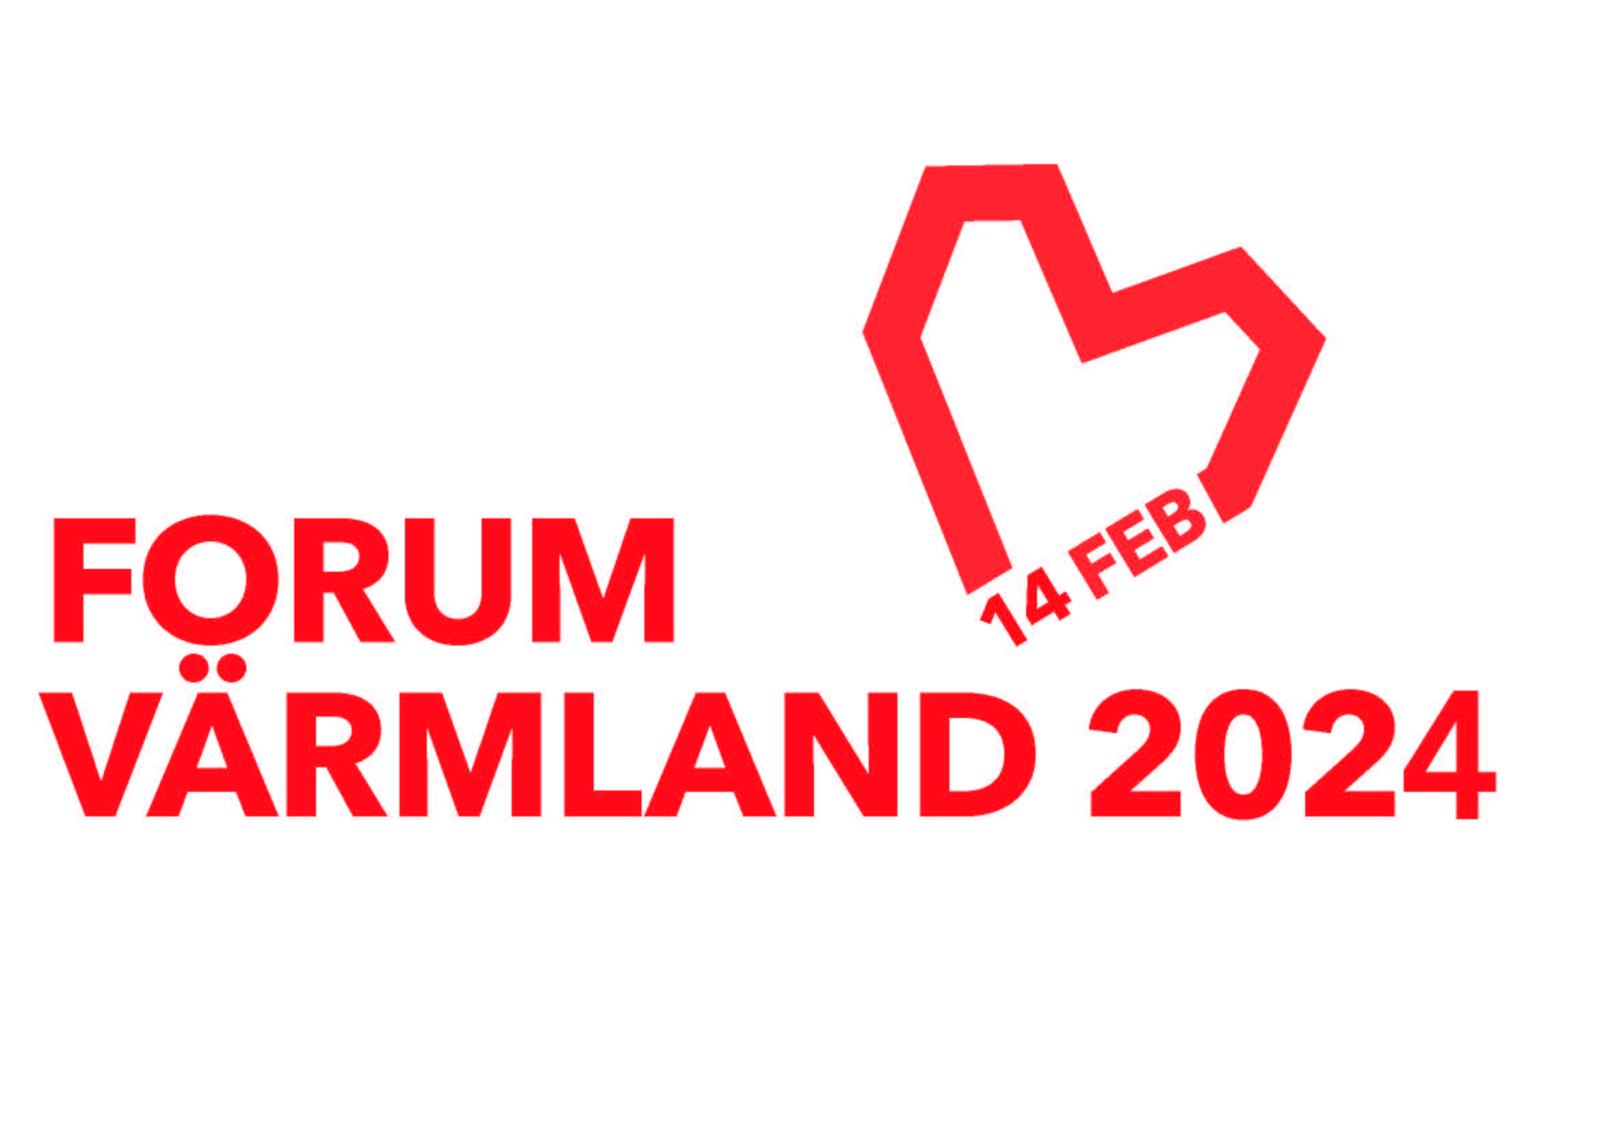 Forum Värmland 2024 logo